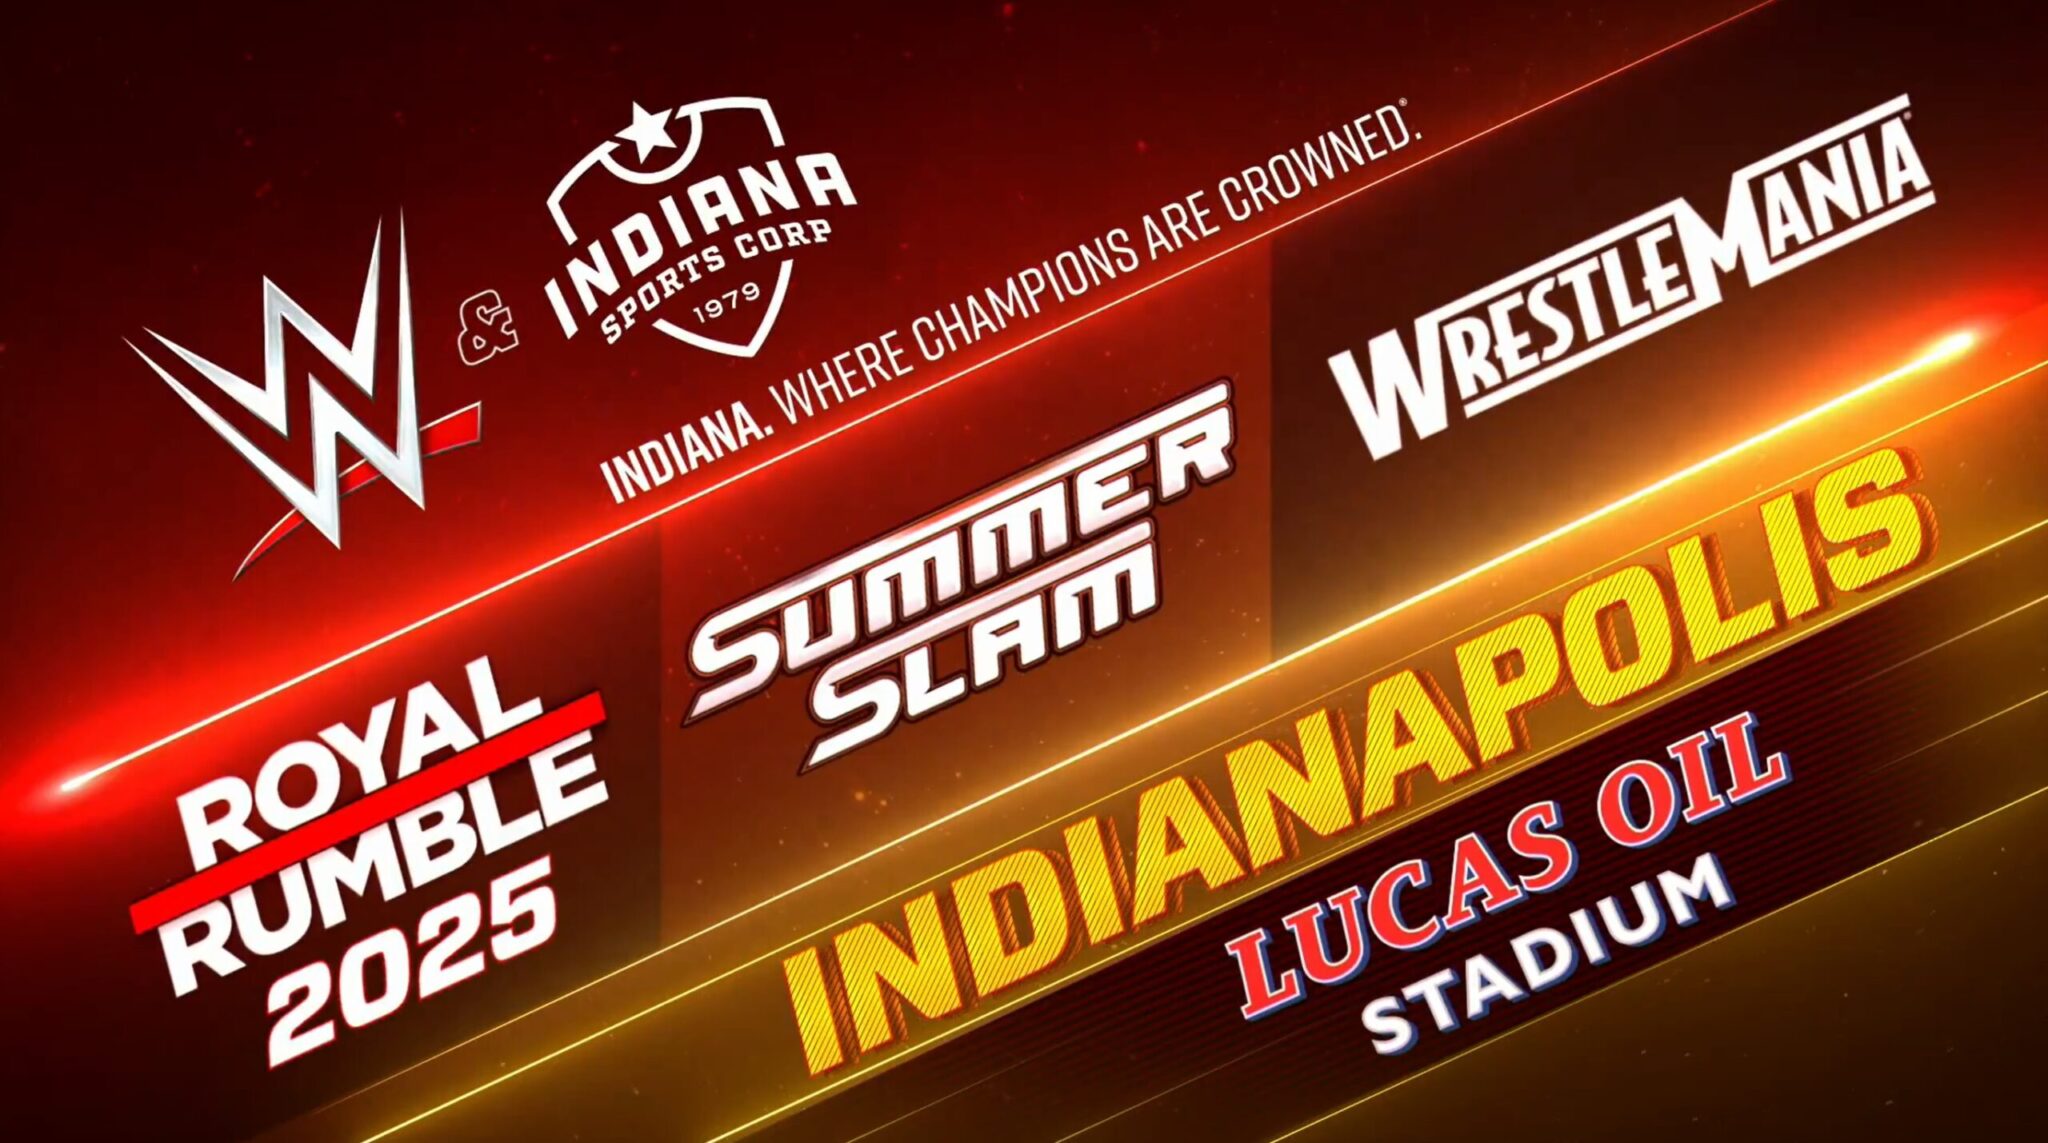 Fresh Updates Regarding the Partnership Between WWE and Indiana Sports Corporation